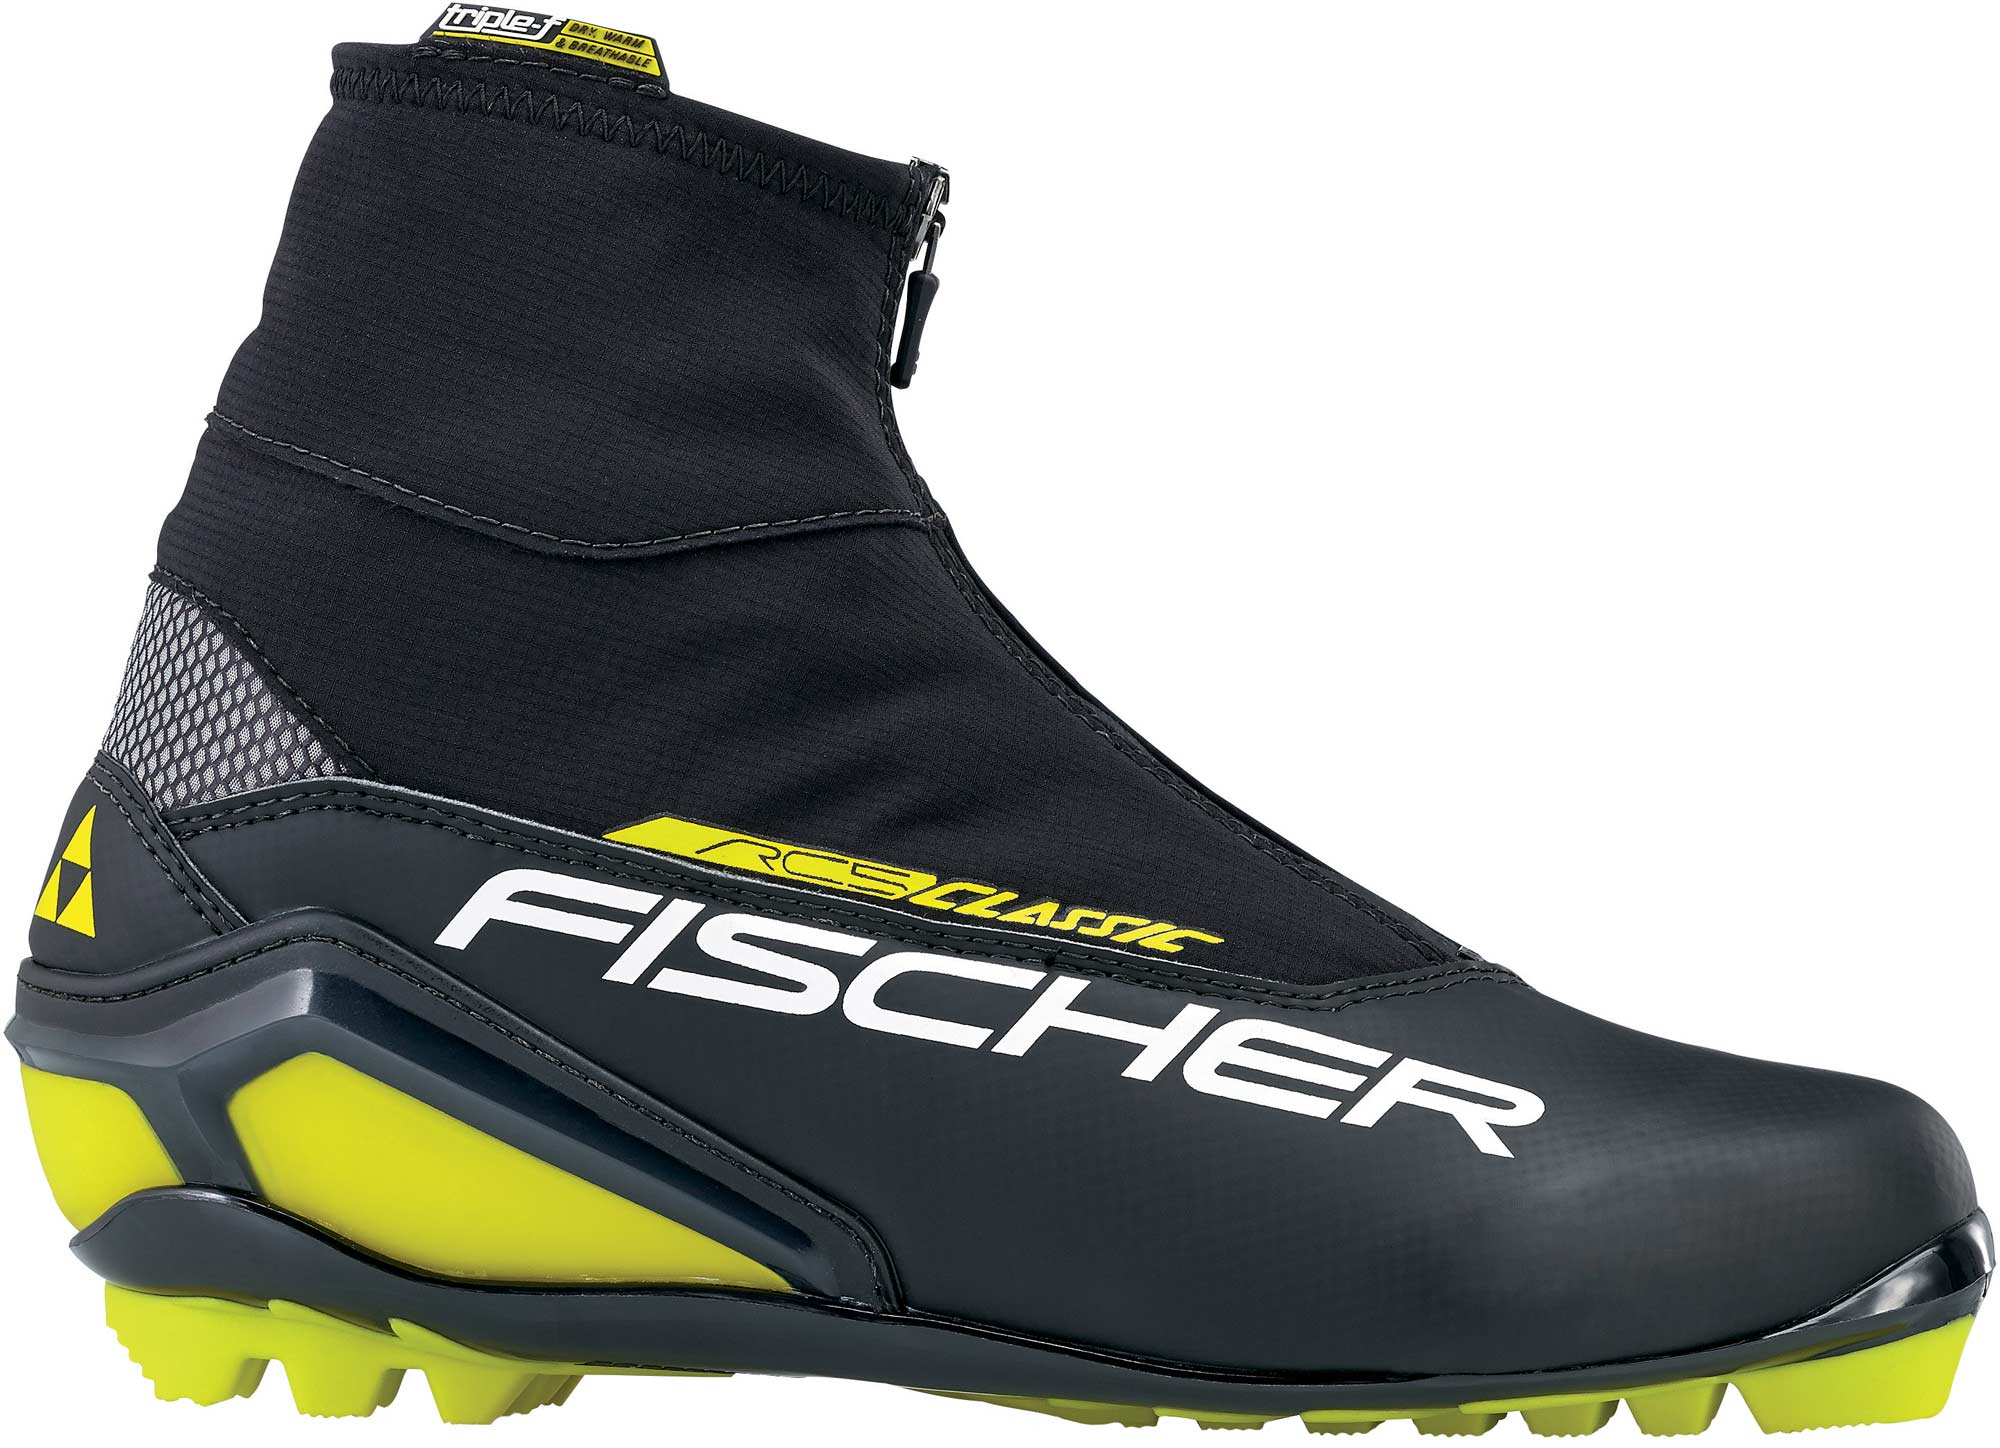 RC5 CLASSIC - Nordic Ski Boots